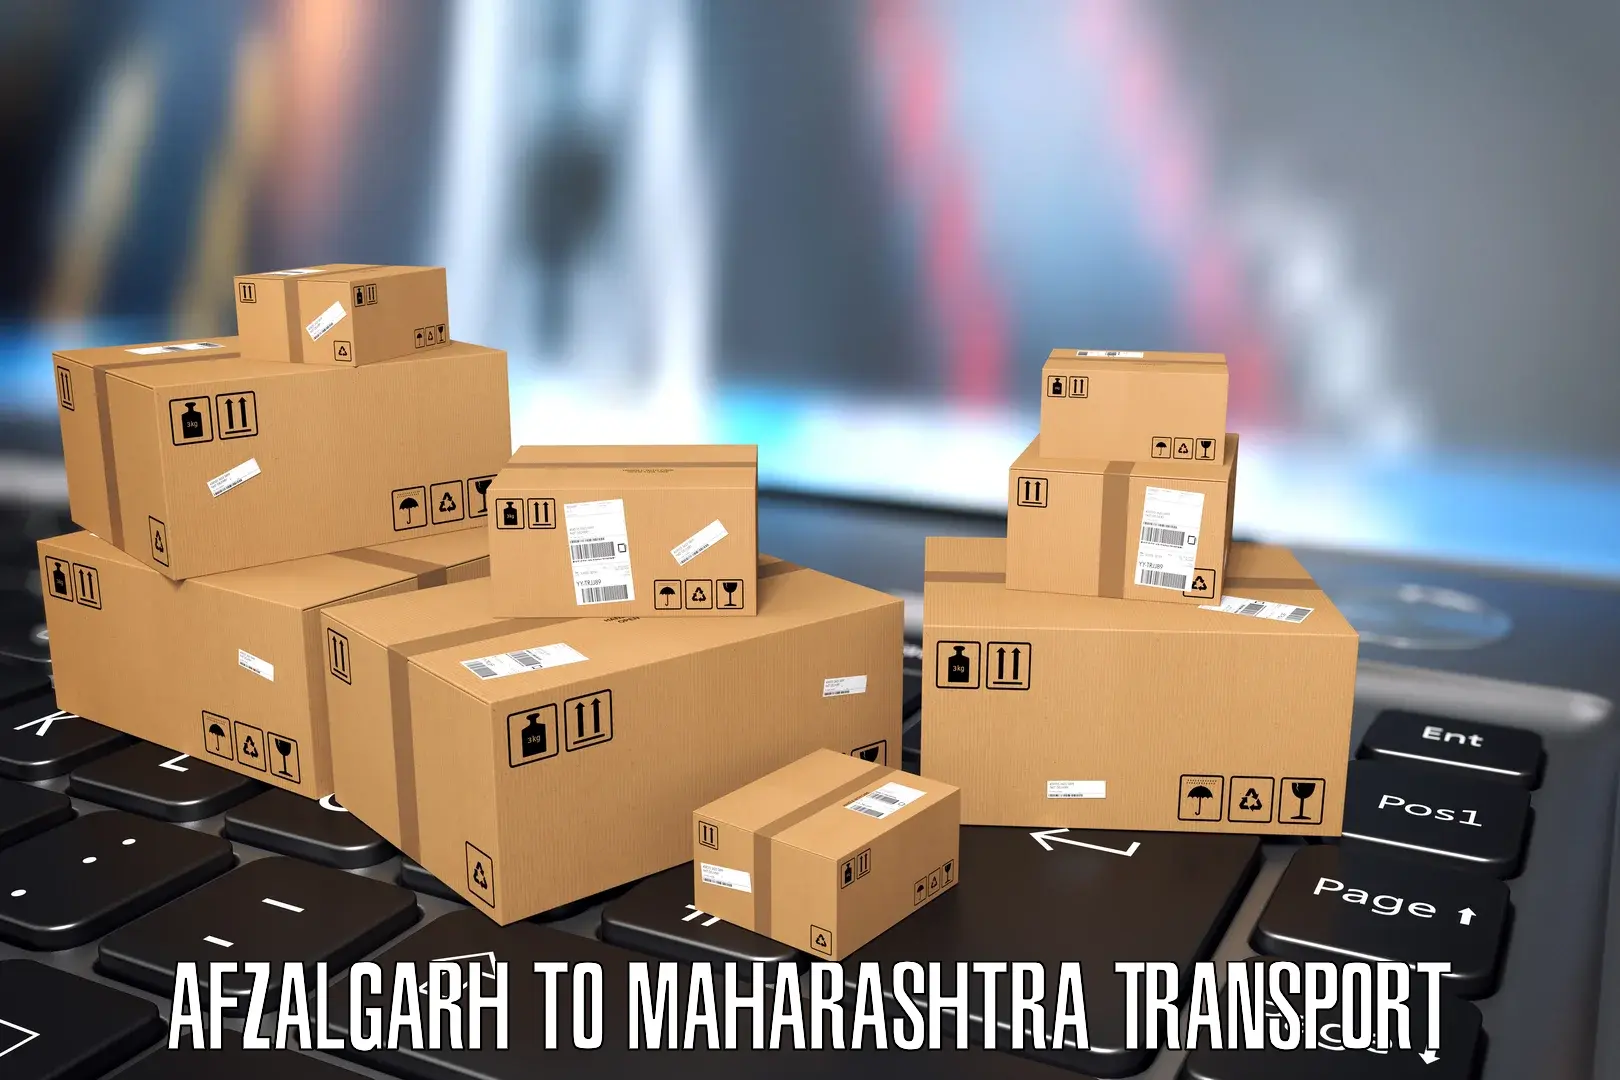 Truck transport companies in India Afzalgarh to Loni Ahmednagar